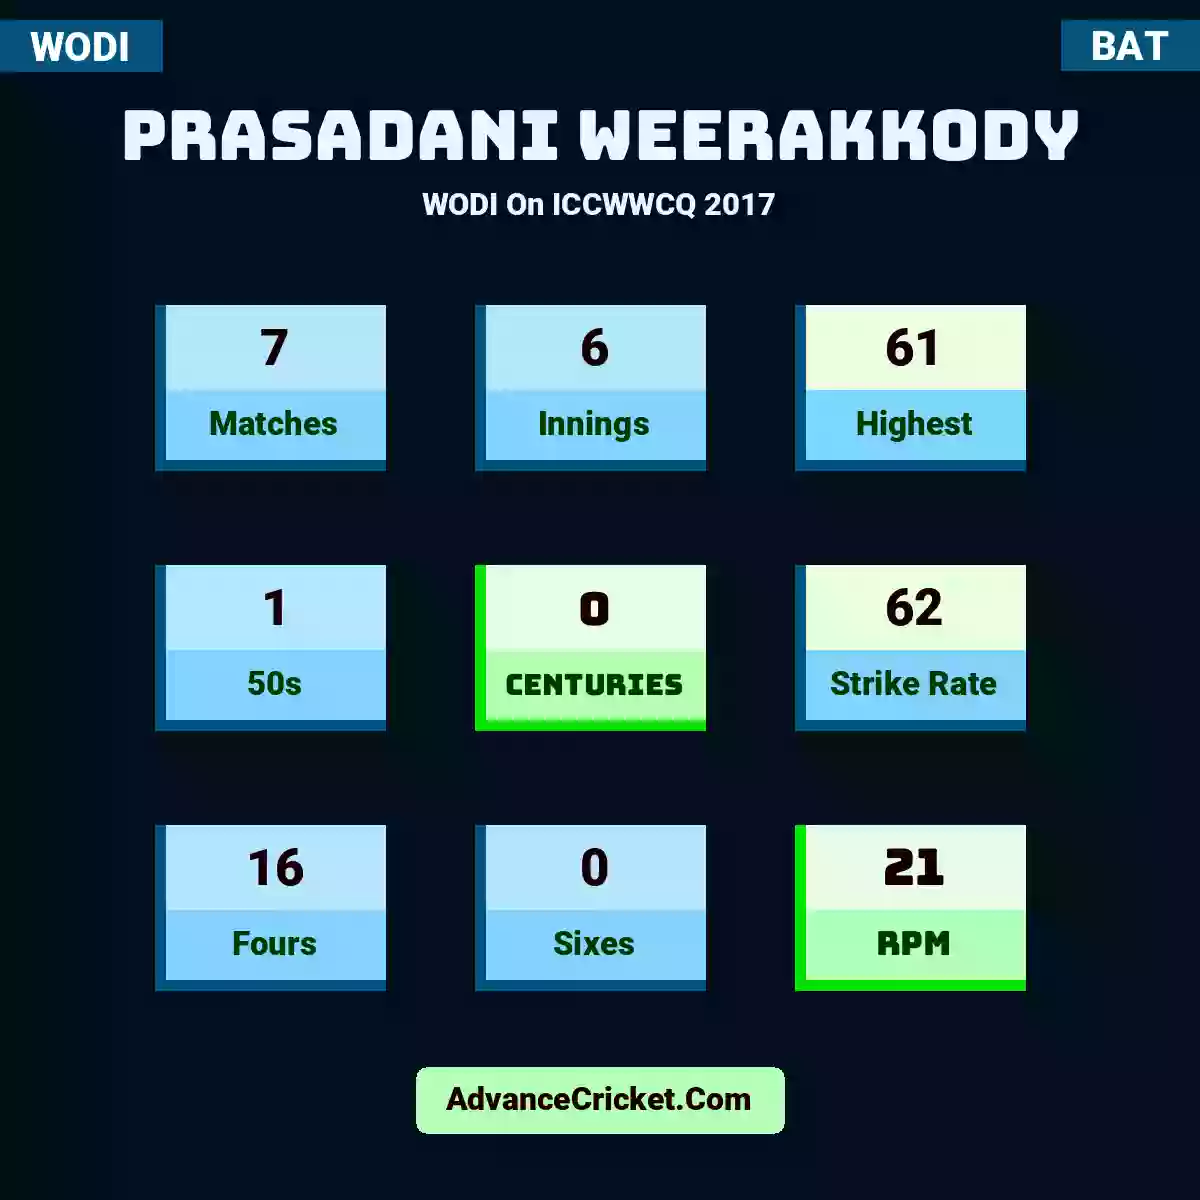 Prasadani Weerakkody WODI  On ICCWWCQ 2017, Prasadani Weerakkody played 7 matches, scored 61 runs as highest, 1 half-centuries, and 0 centuries, with a strike rate of 62. P.Weerakkody hit 16 fours and 0 sixes, with an RPM of 21.